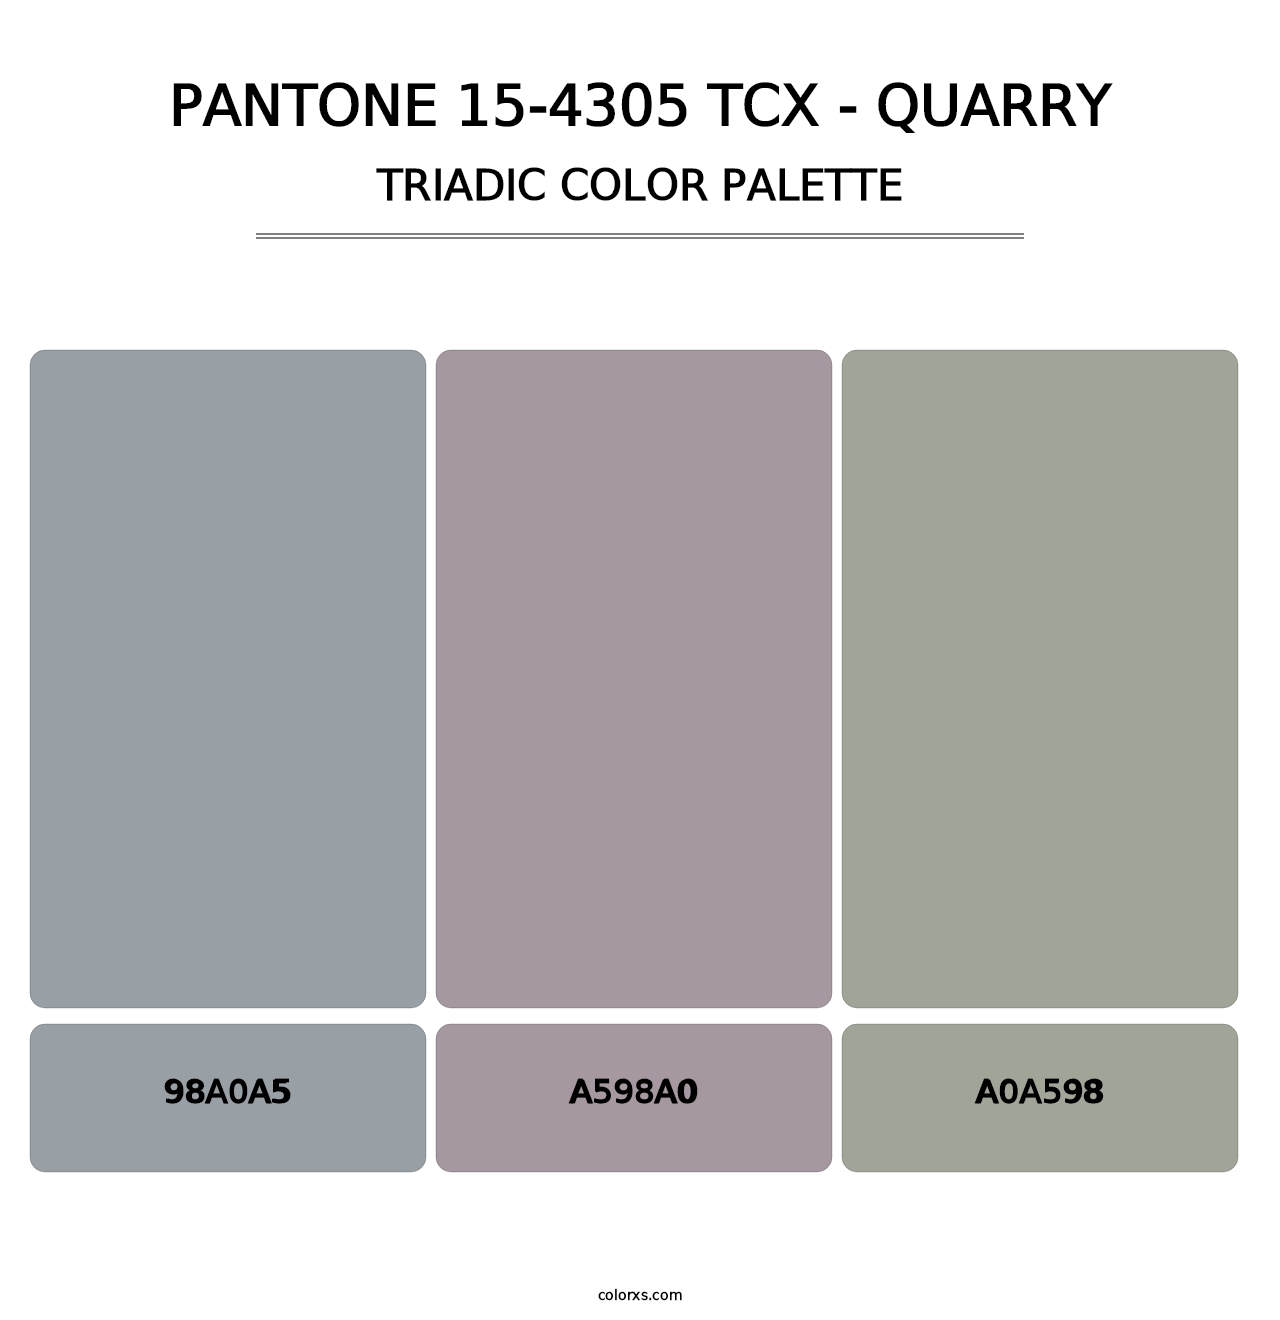 PANTONE 15-4305 TCX - Quarry - Triadic Color Palette